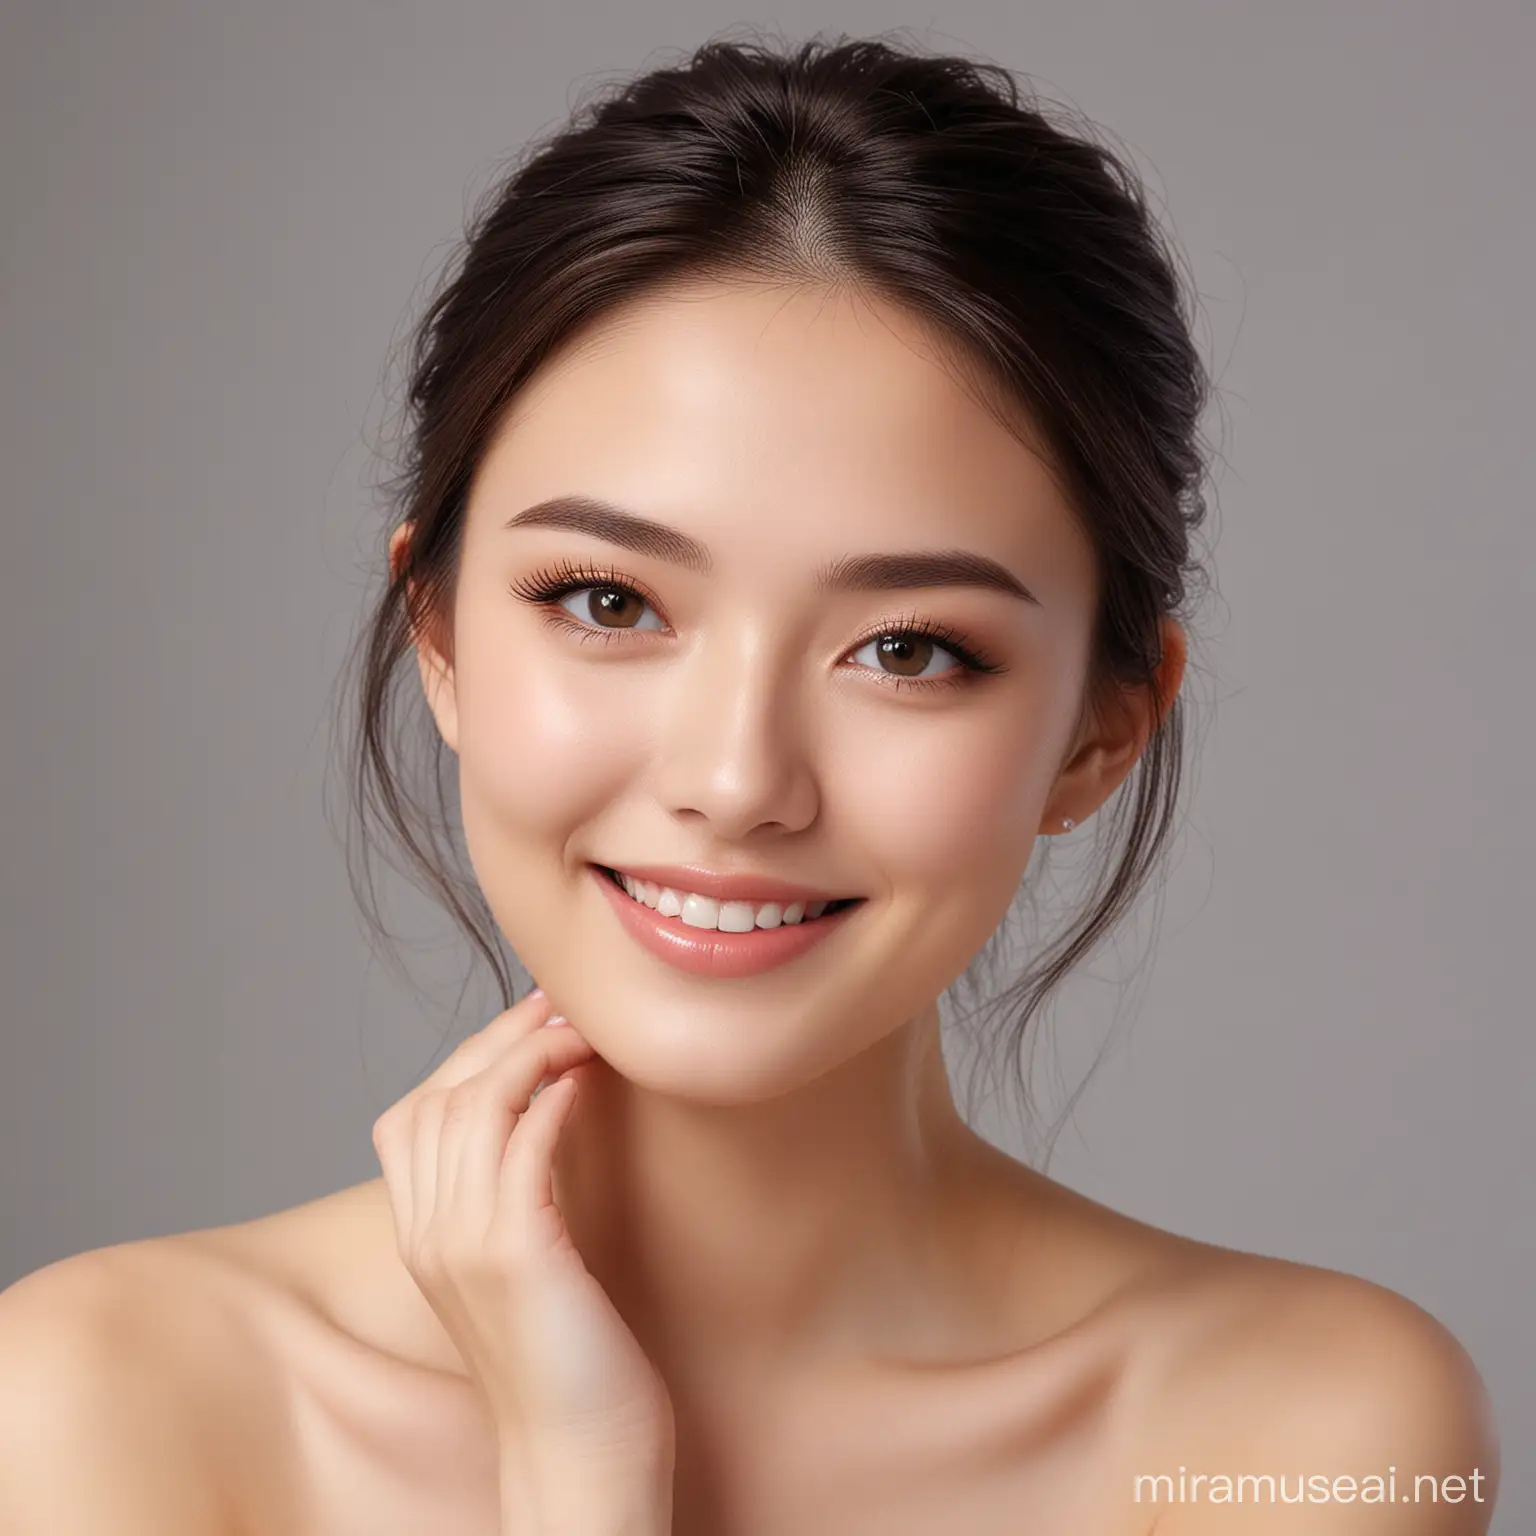 Elegant Oriental Beauty with AlmondShaped Eyes and Radiant Smile